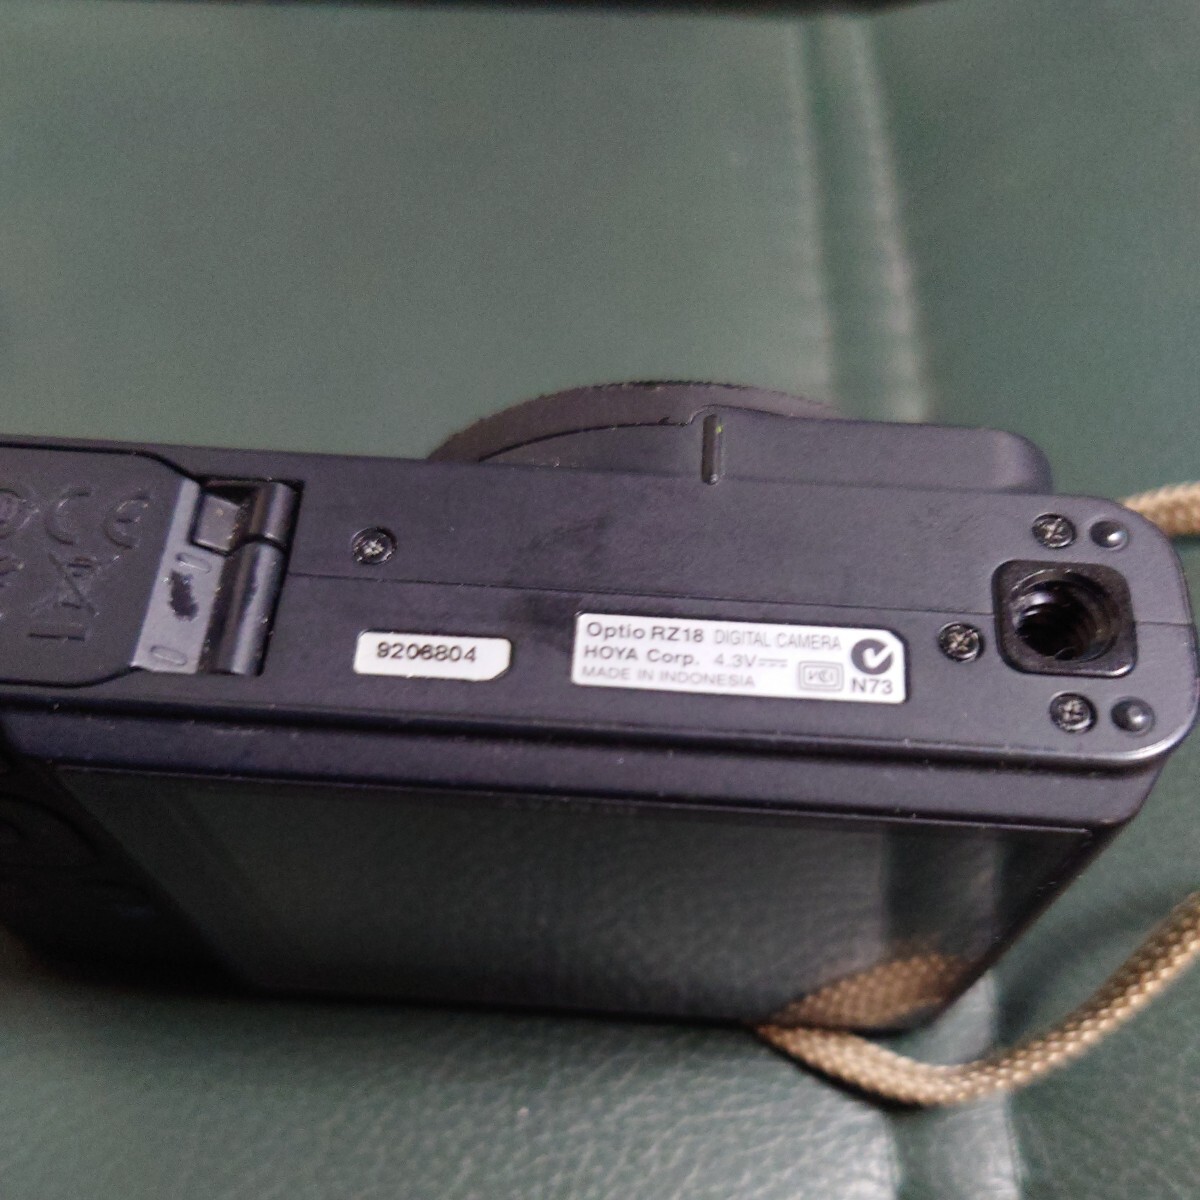 OPTIO RZ18 compact digital camera secondhand goods Junk present condition goods electrification verification settled 